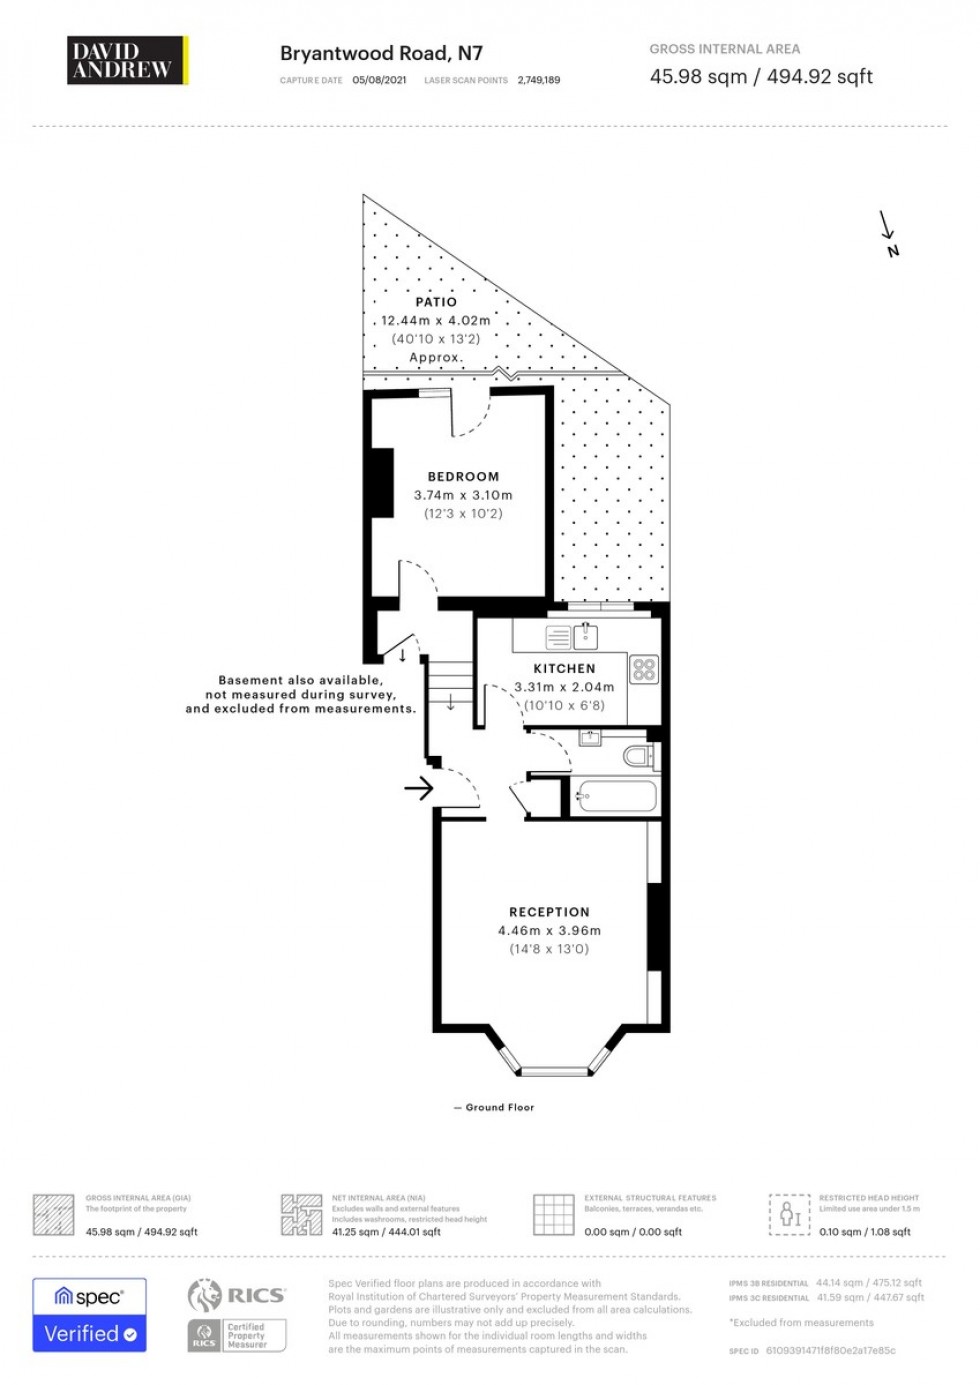 Floorplan for Bryantwood Road, N7 7BG